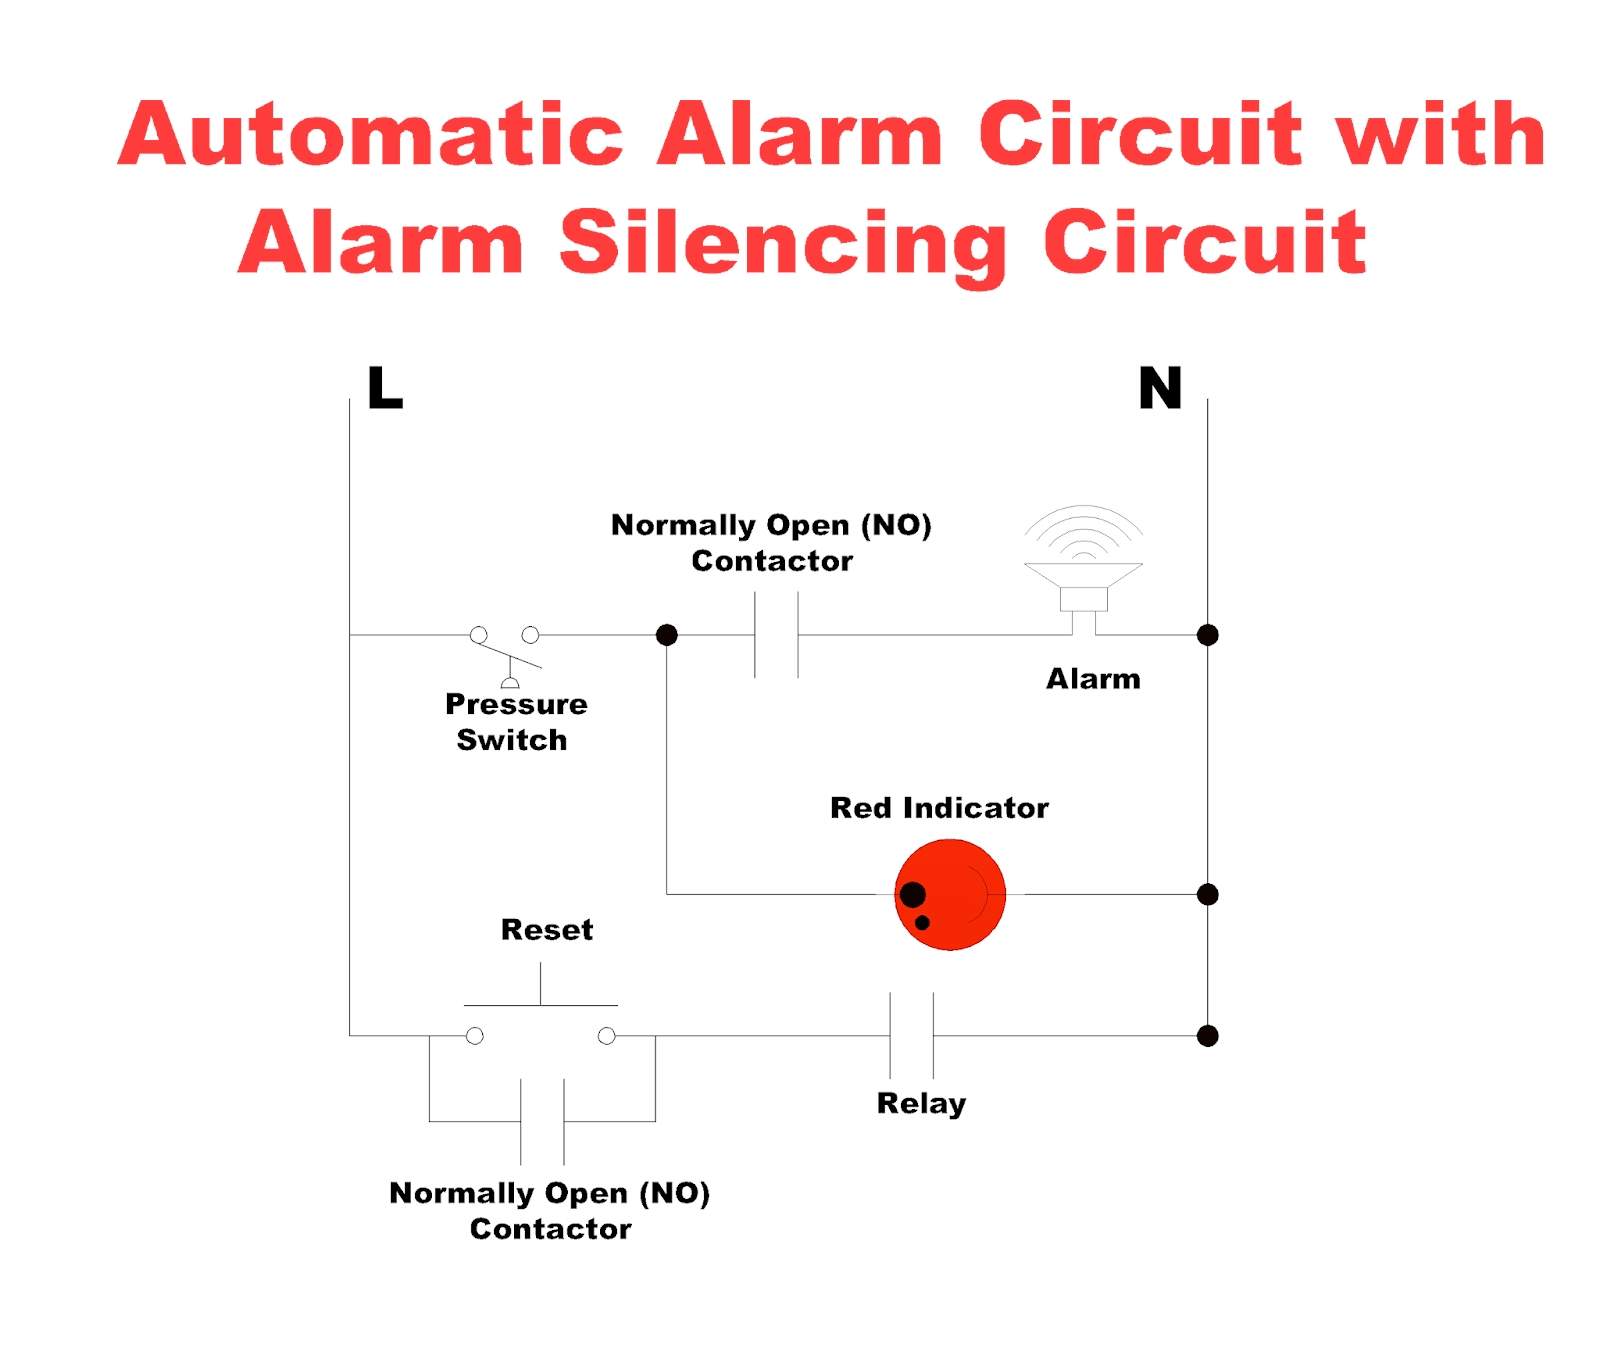 Automatic Alarm Circuit with Alarm Silencing Circuit